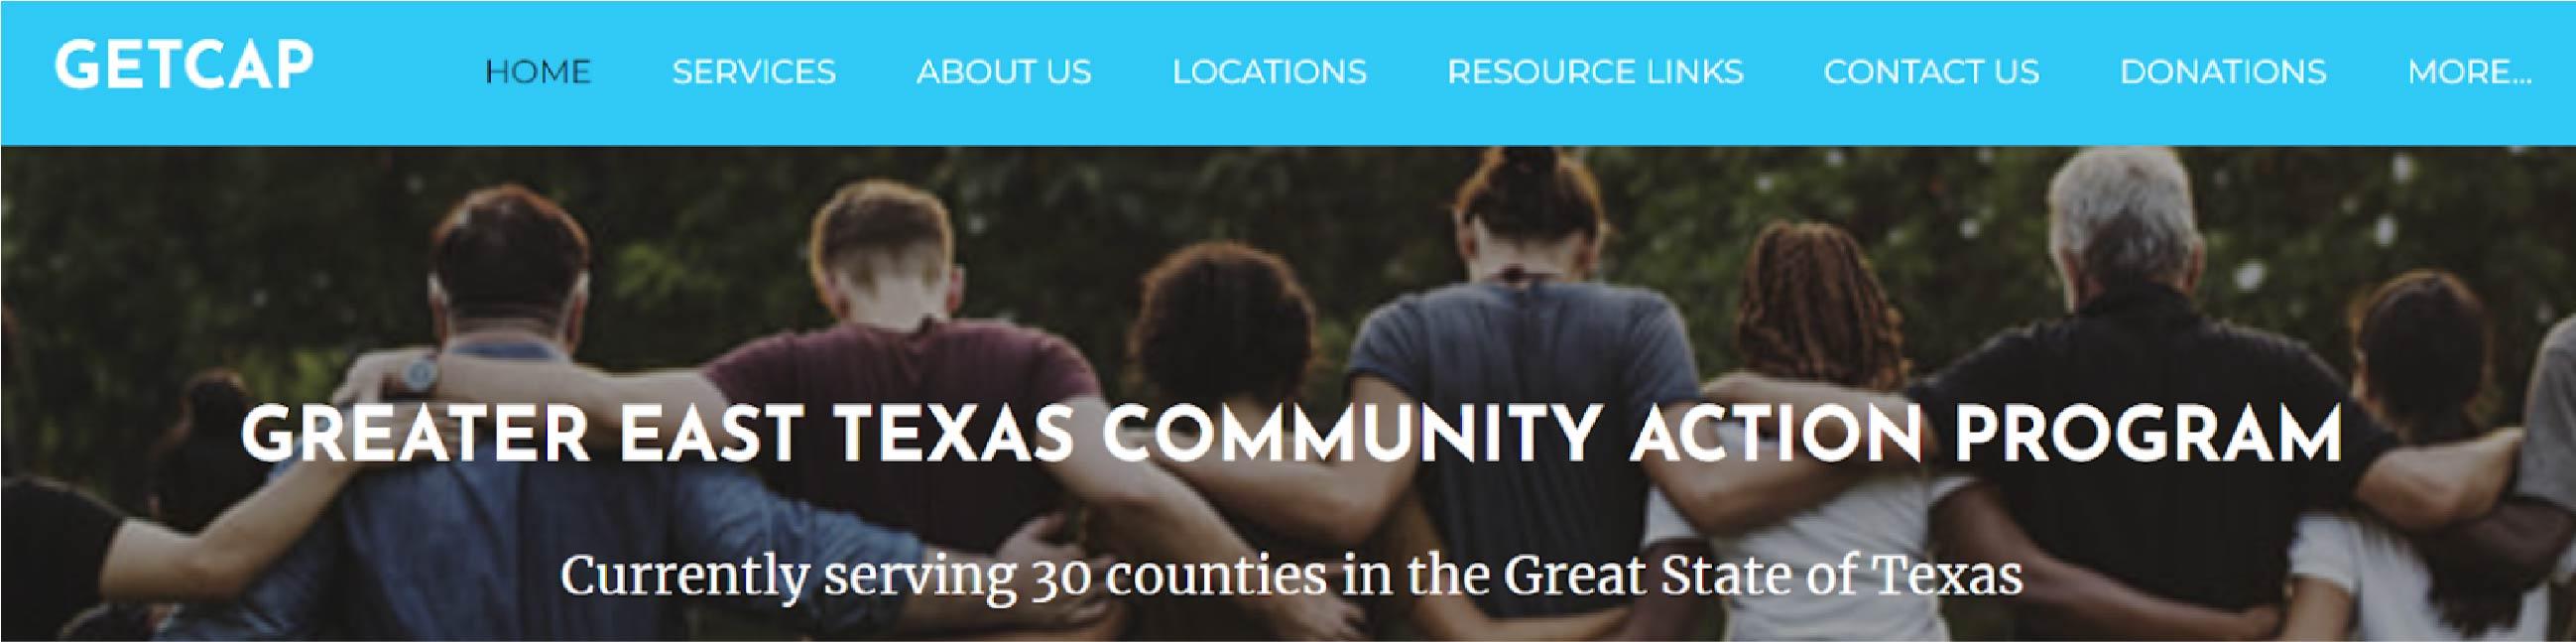 Region 7 ESC McKinney Vento Homeless Students GETCAP Greater East Texas Community Action Program